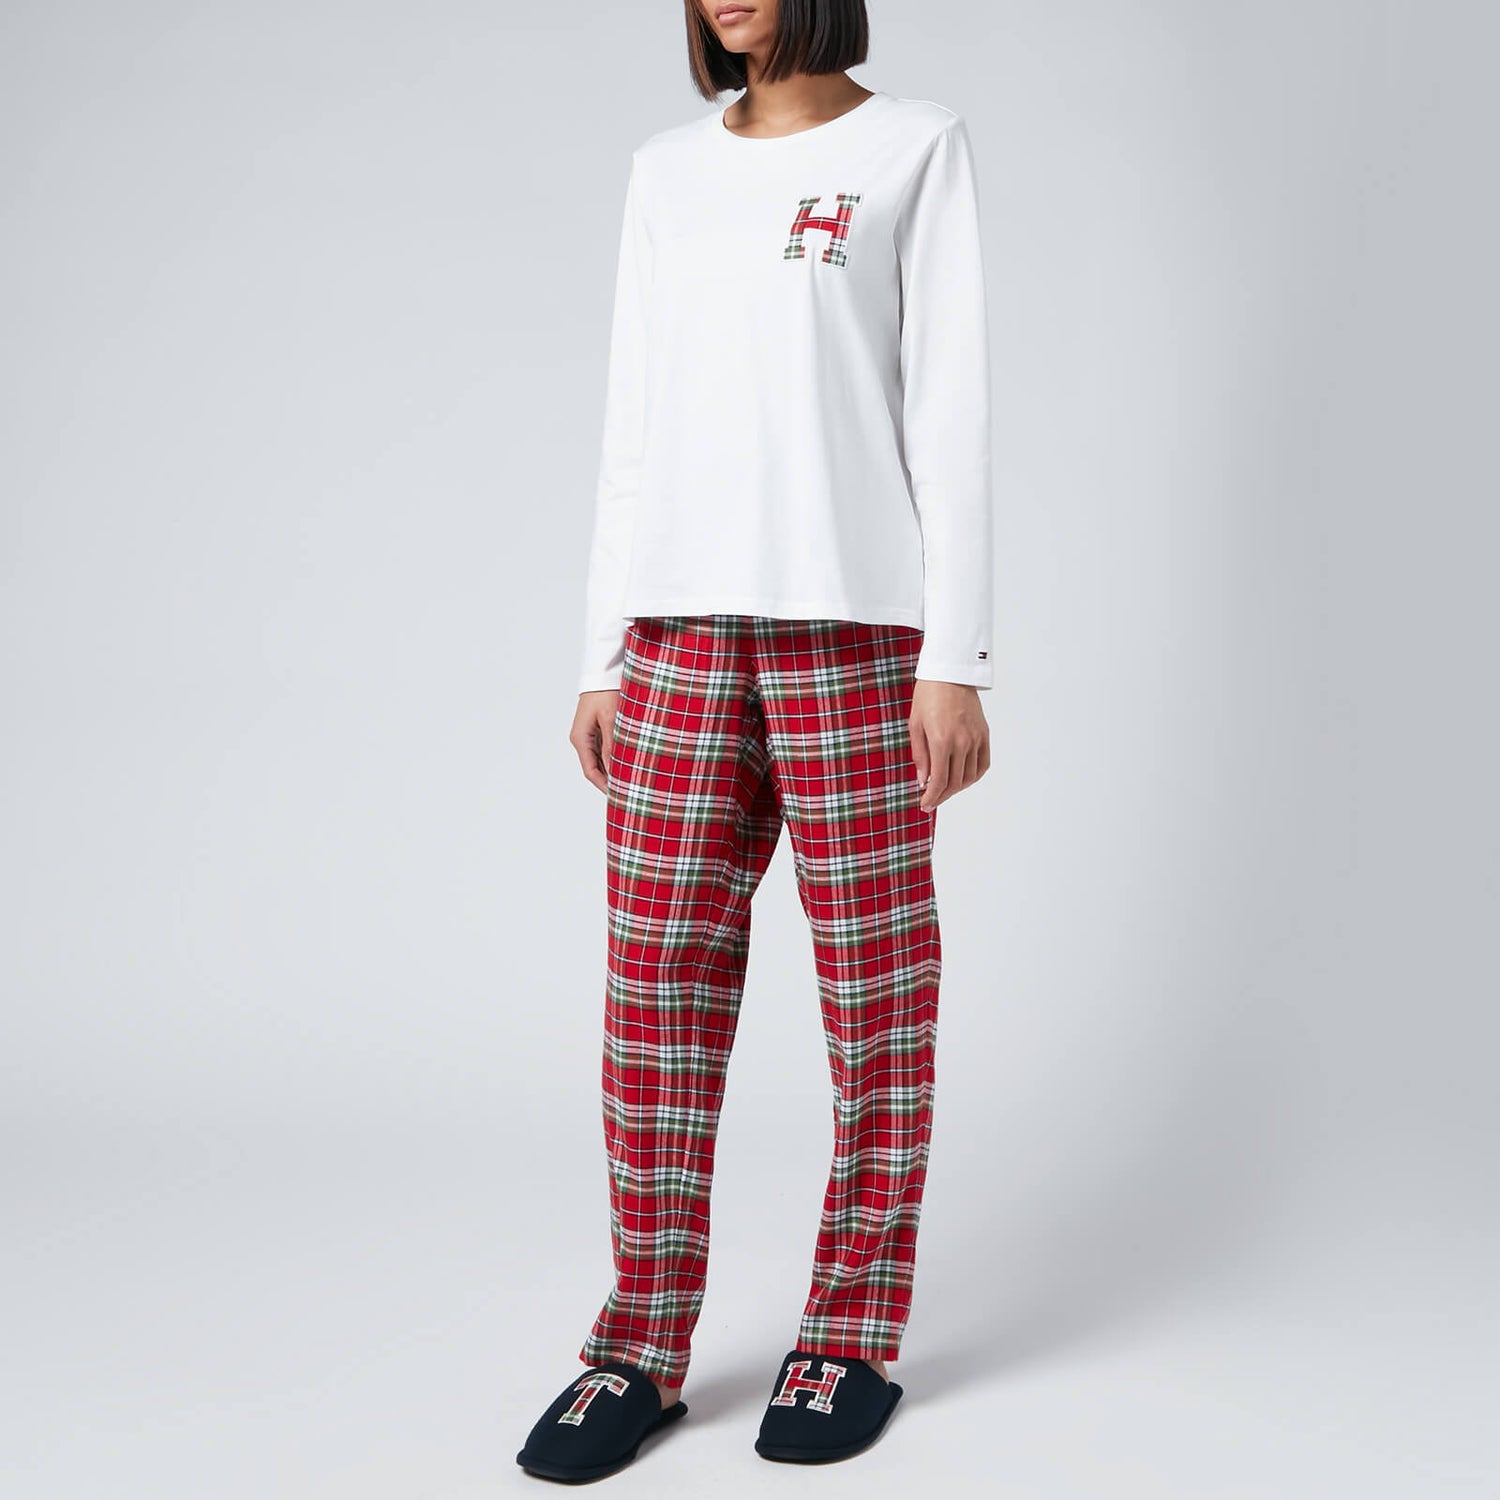 Tommy Hilfiger Women's Organic Cotton Gifting Pyjama Set With Slippers - White/Hilfiger Plaid - XS